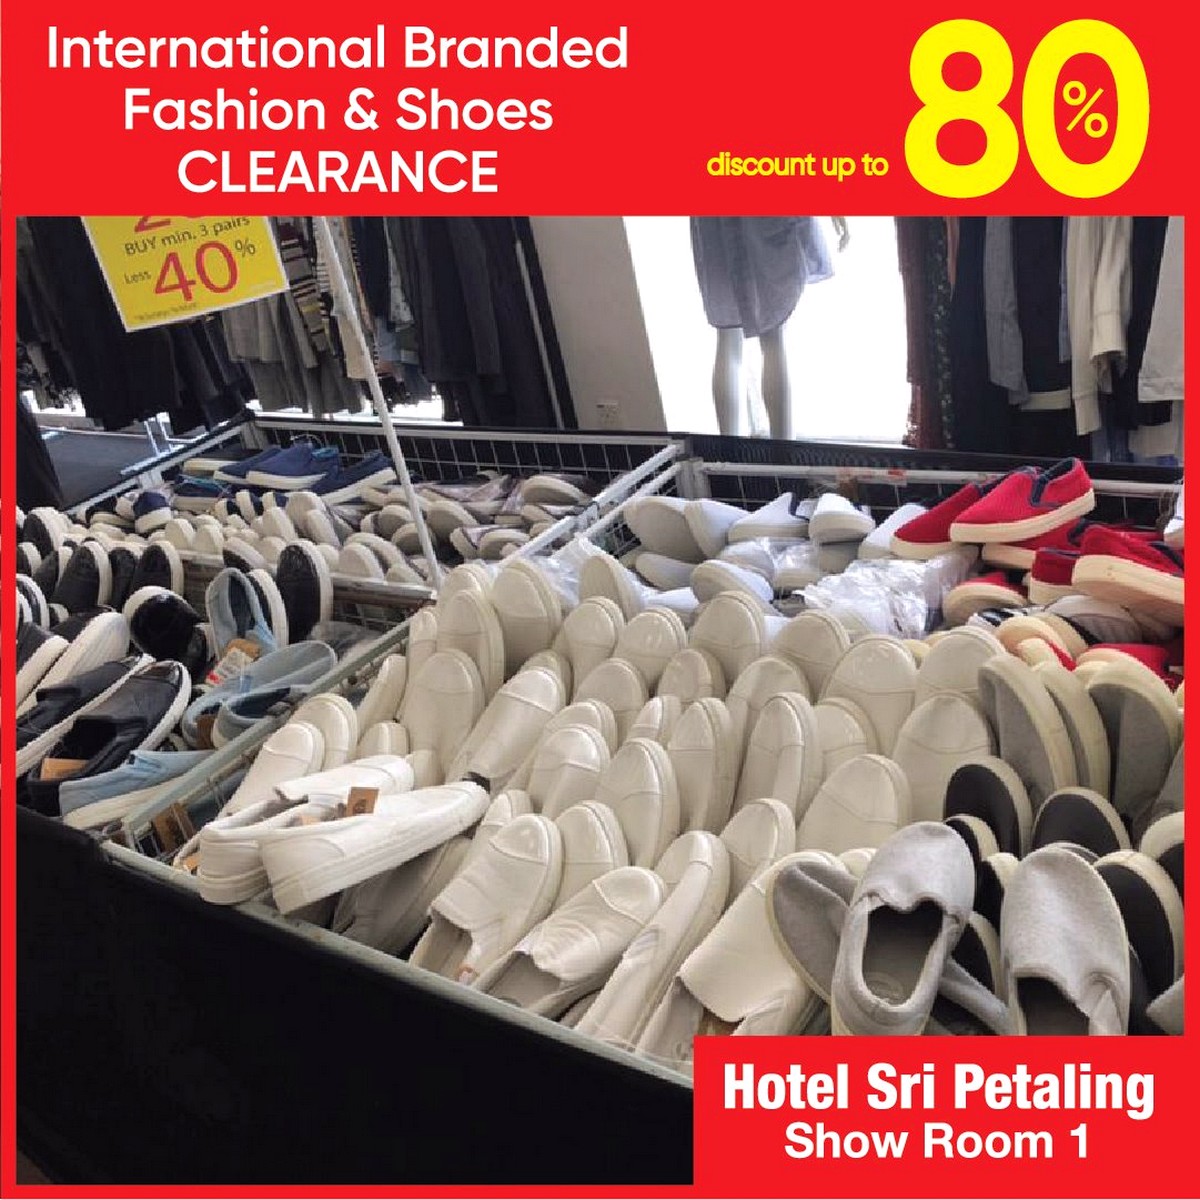 Hotel-Sri-Petaling-Warehouse-Sale-2021-12 - Apparels Fashion Accessories Fashion Lifestyle & Department Store Kuala Lumpur Selangor Warehouse Sale & Clearance in Malaysia 